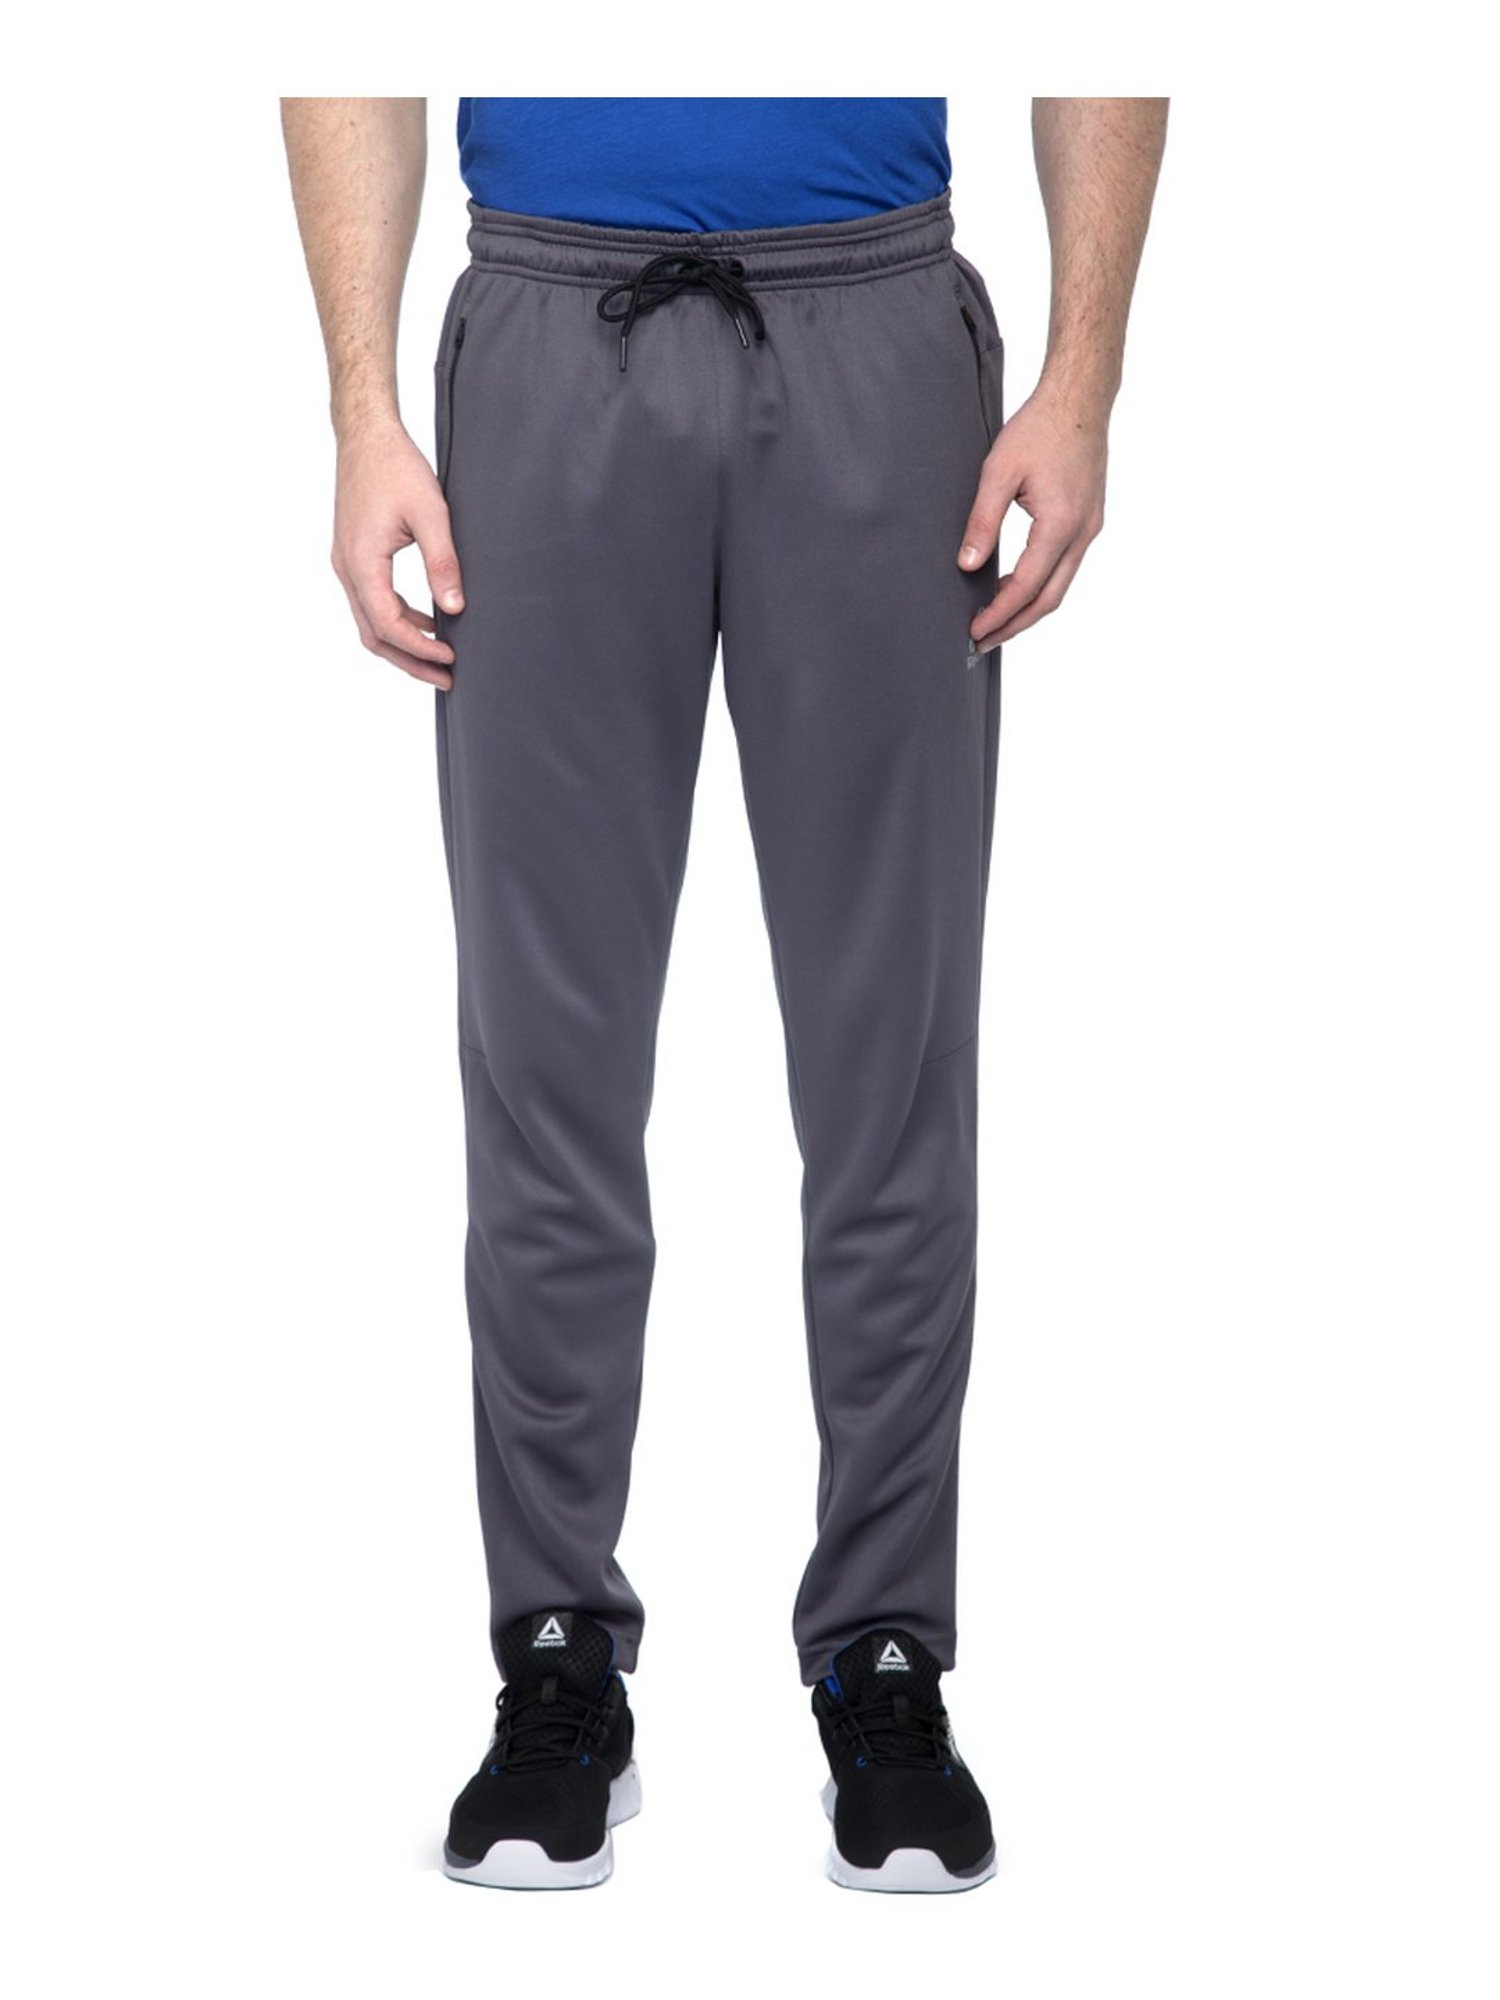 Buy Reebok Grey Slim Fit Trackpants for 